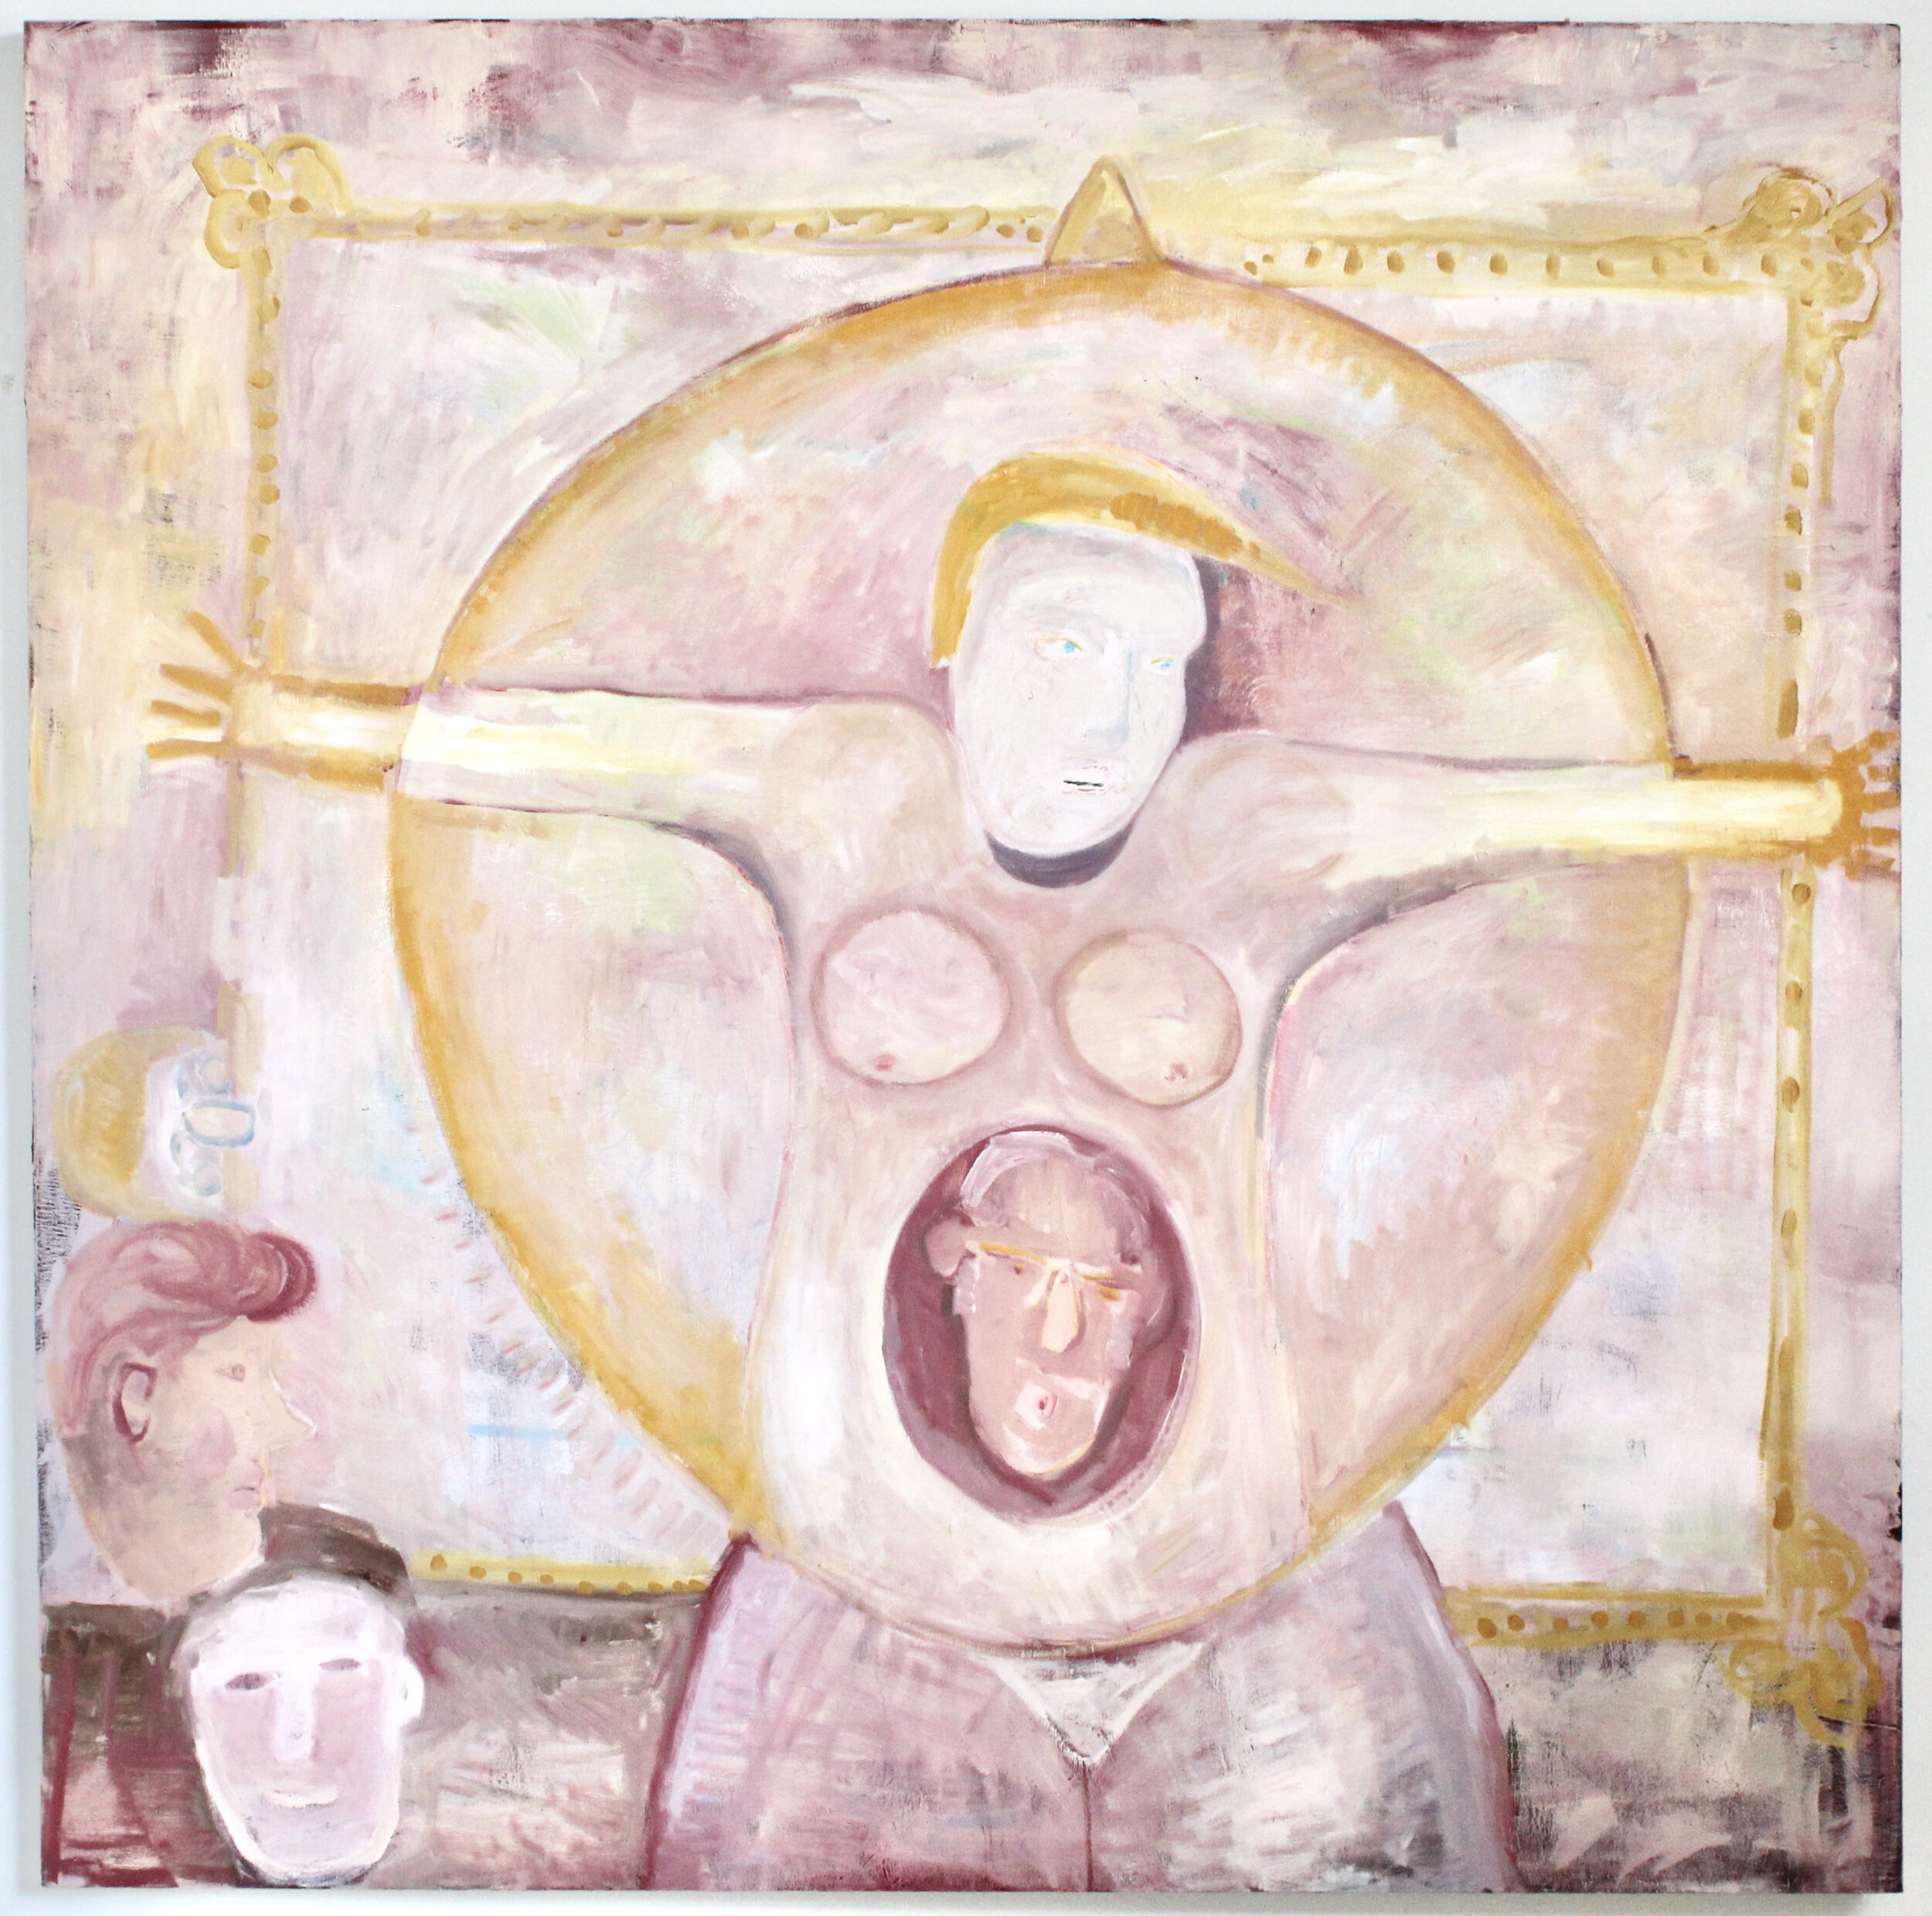   Guilt (2020)   72”x72” Oil on Canvas 